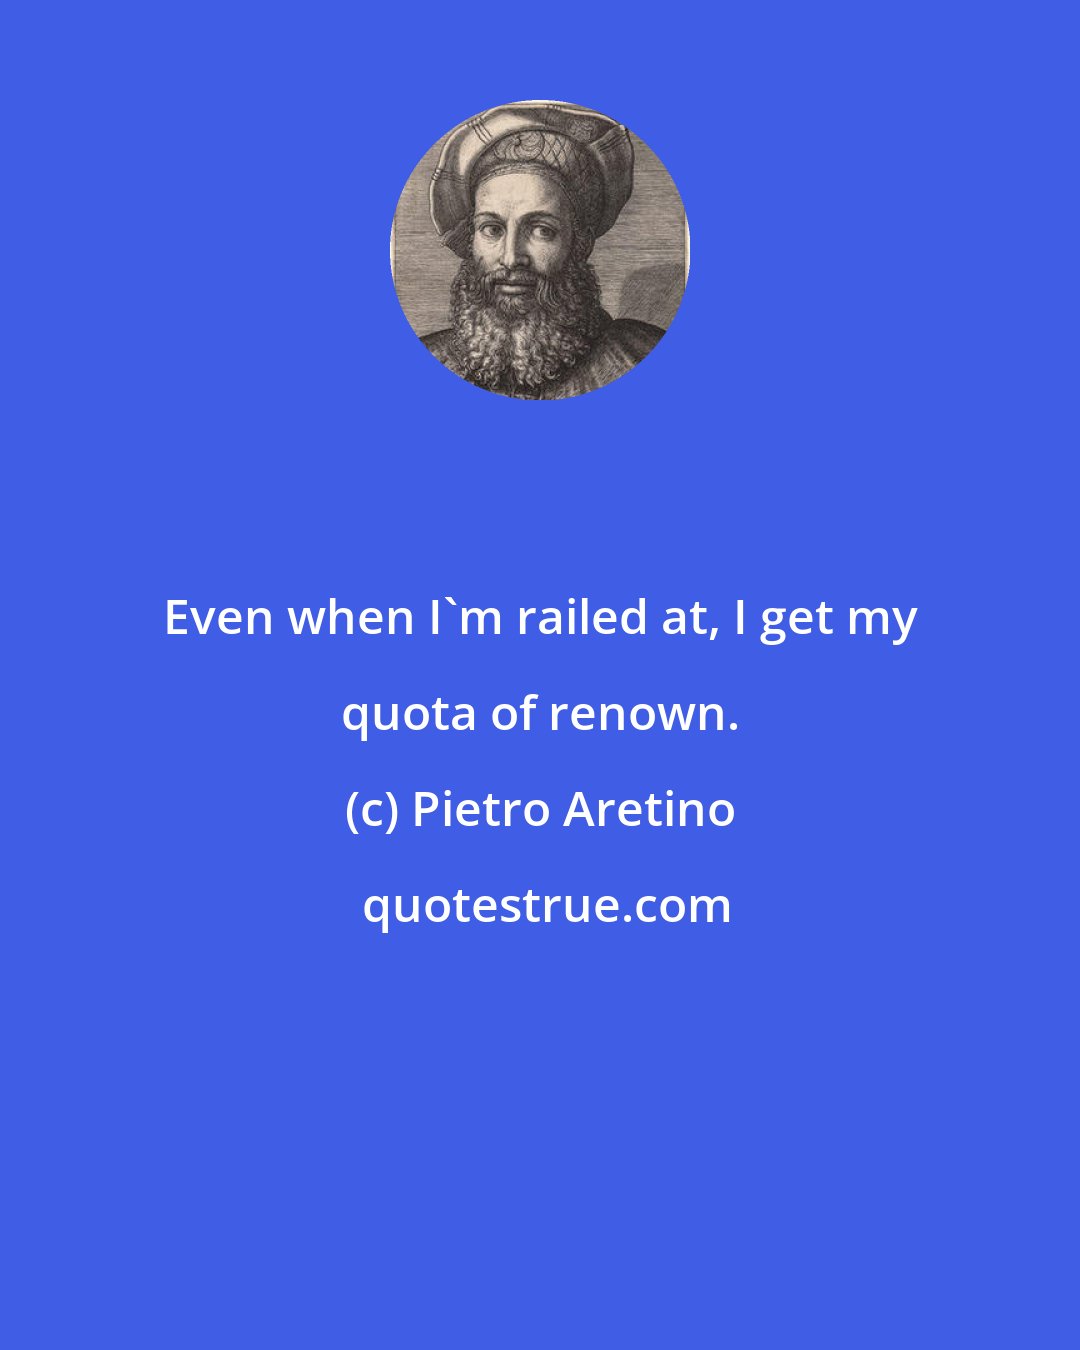 Pietro Aretino: Even when I'm railed at, I get my quota of renown.